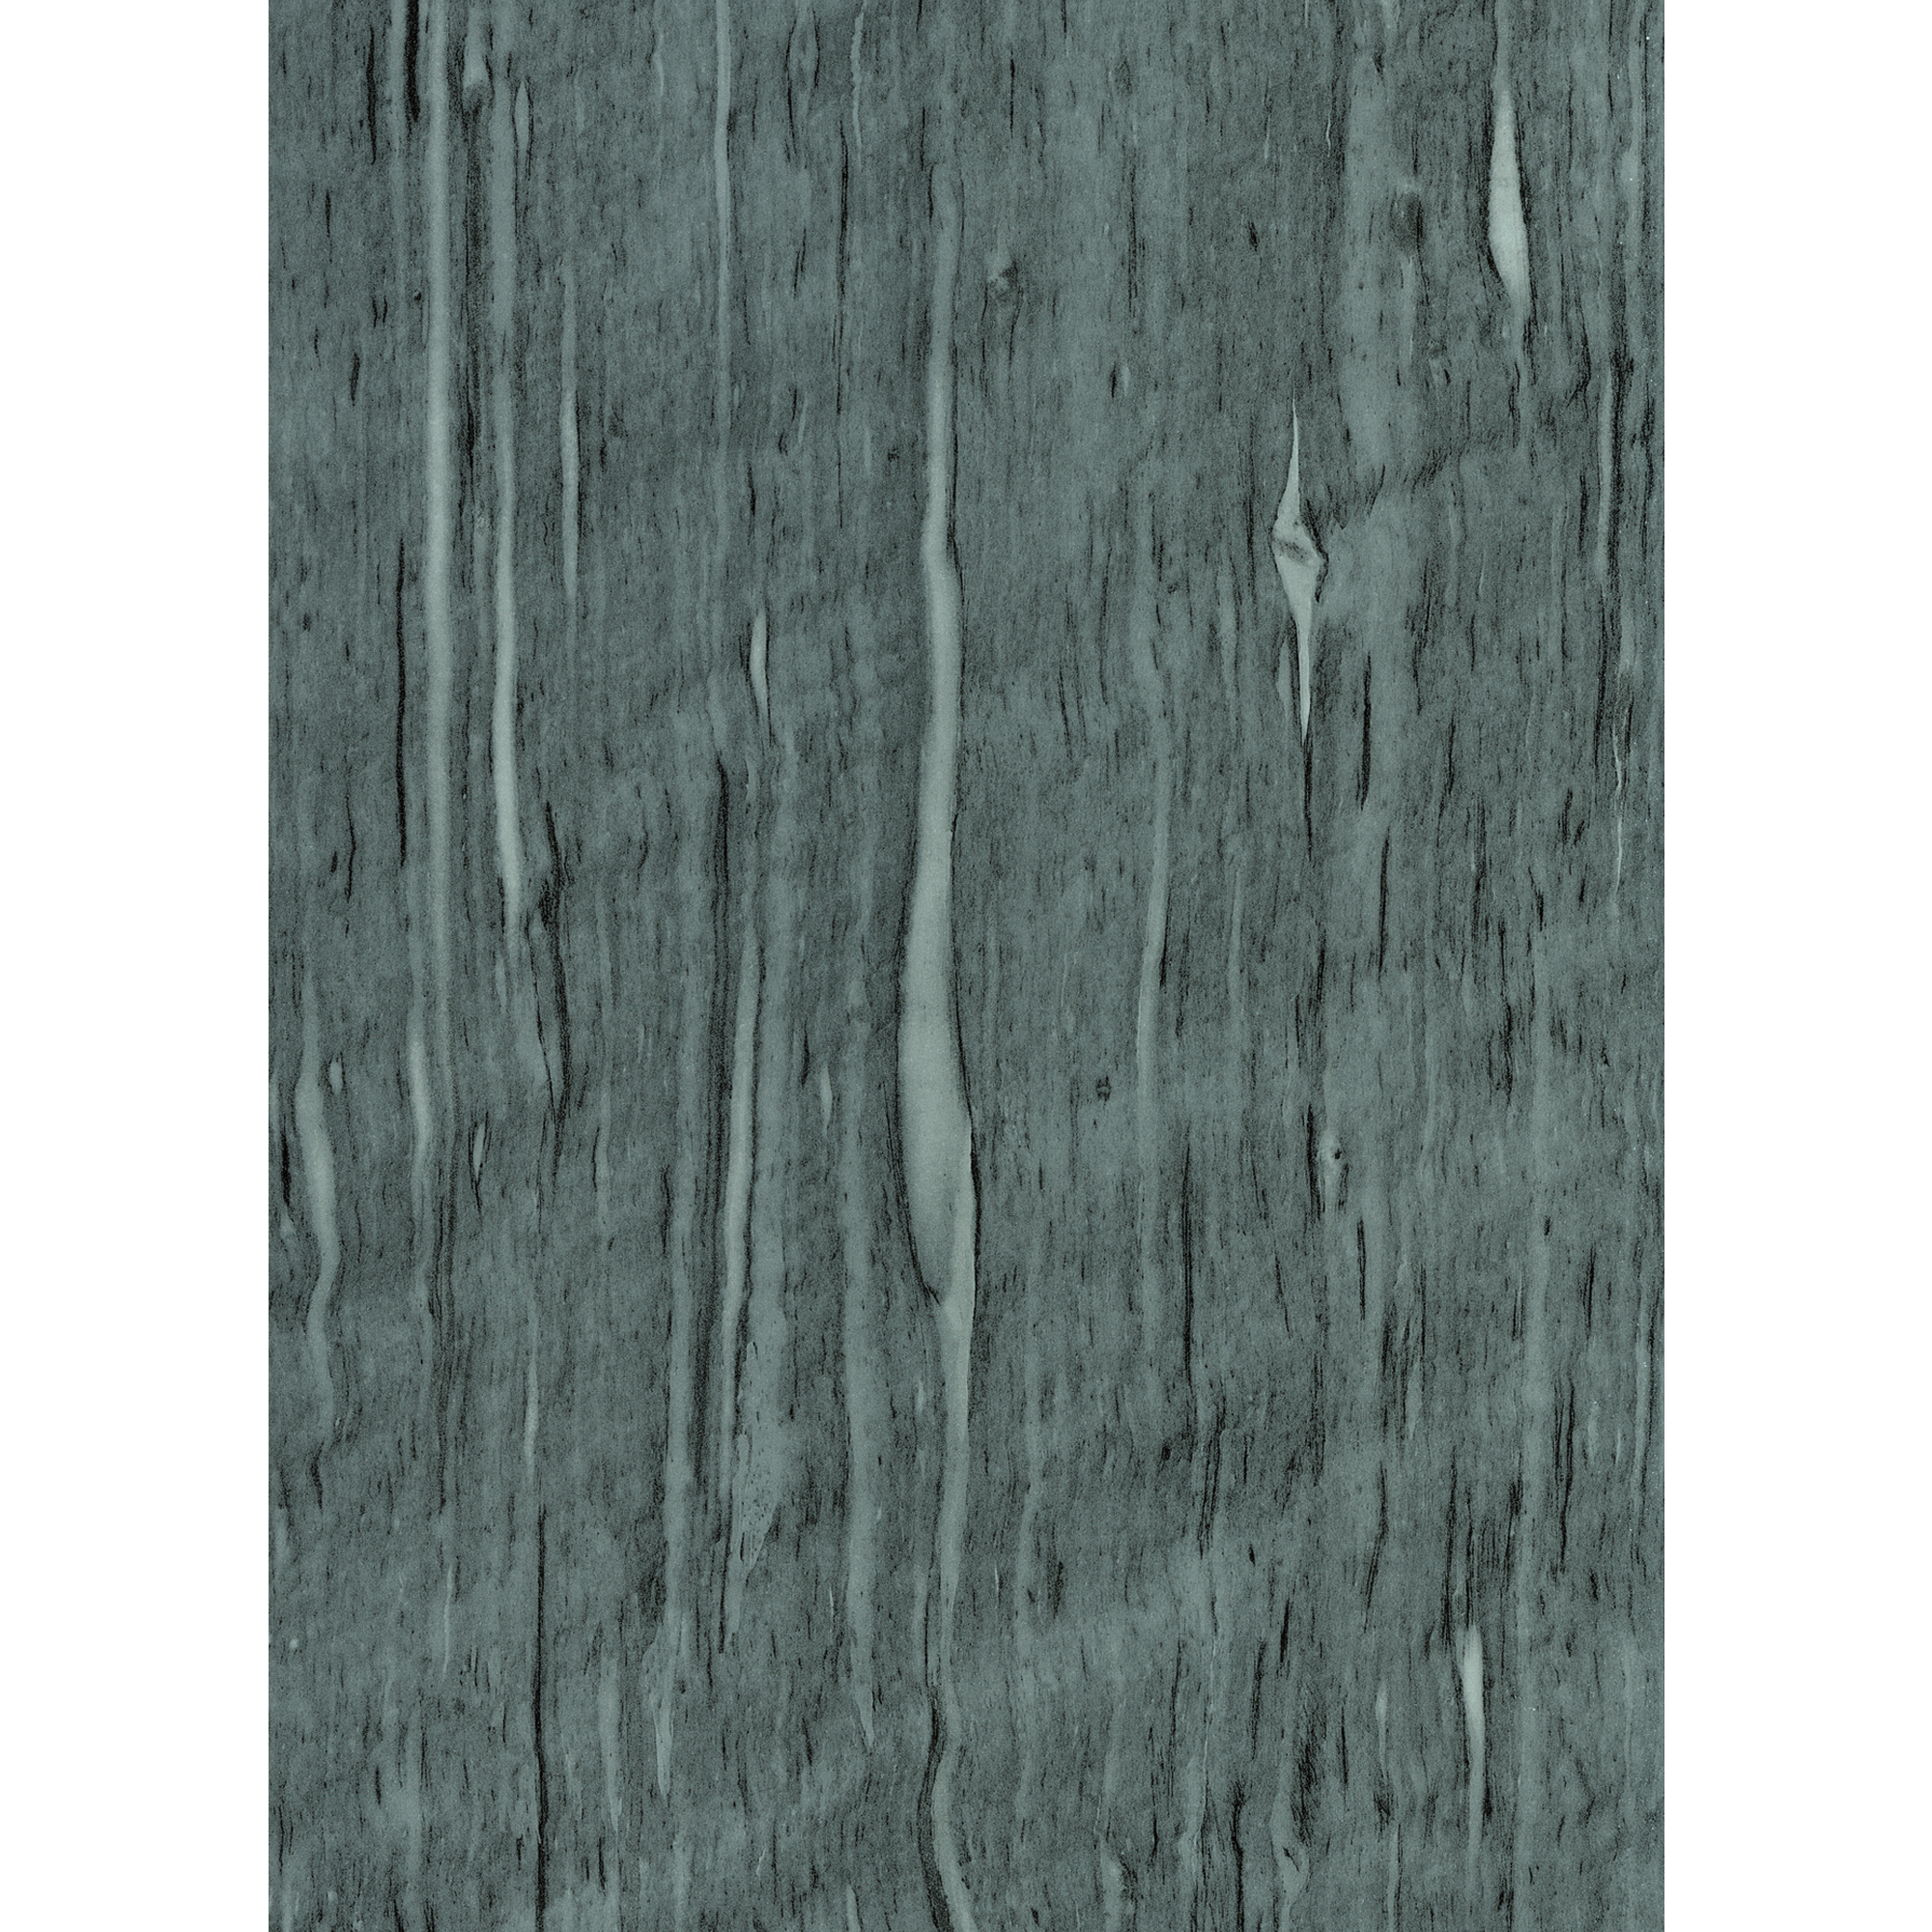 Wandanschlussprofil "Plus" Granit Brasilia grau 590 x 20 x 30 mm + product picture